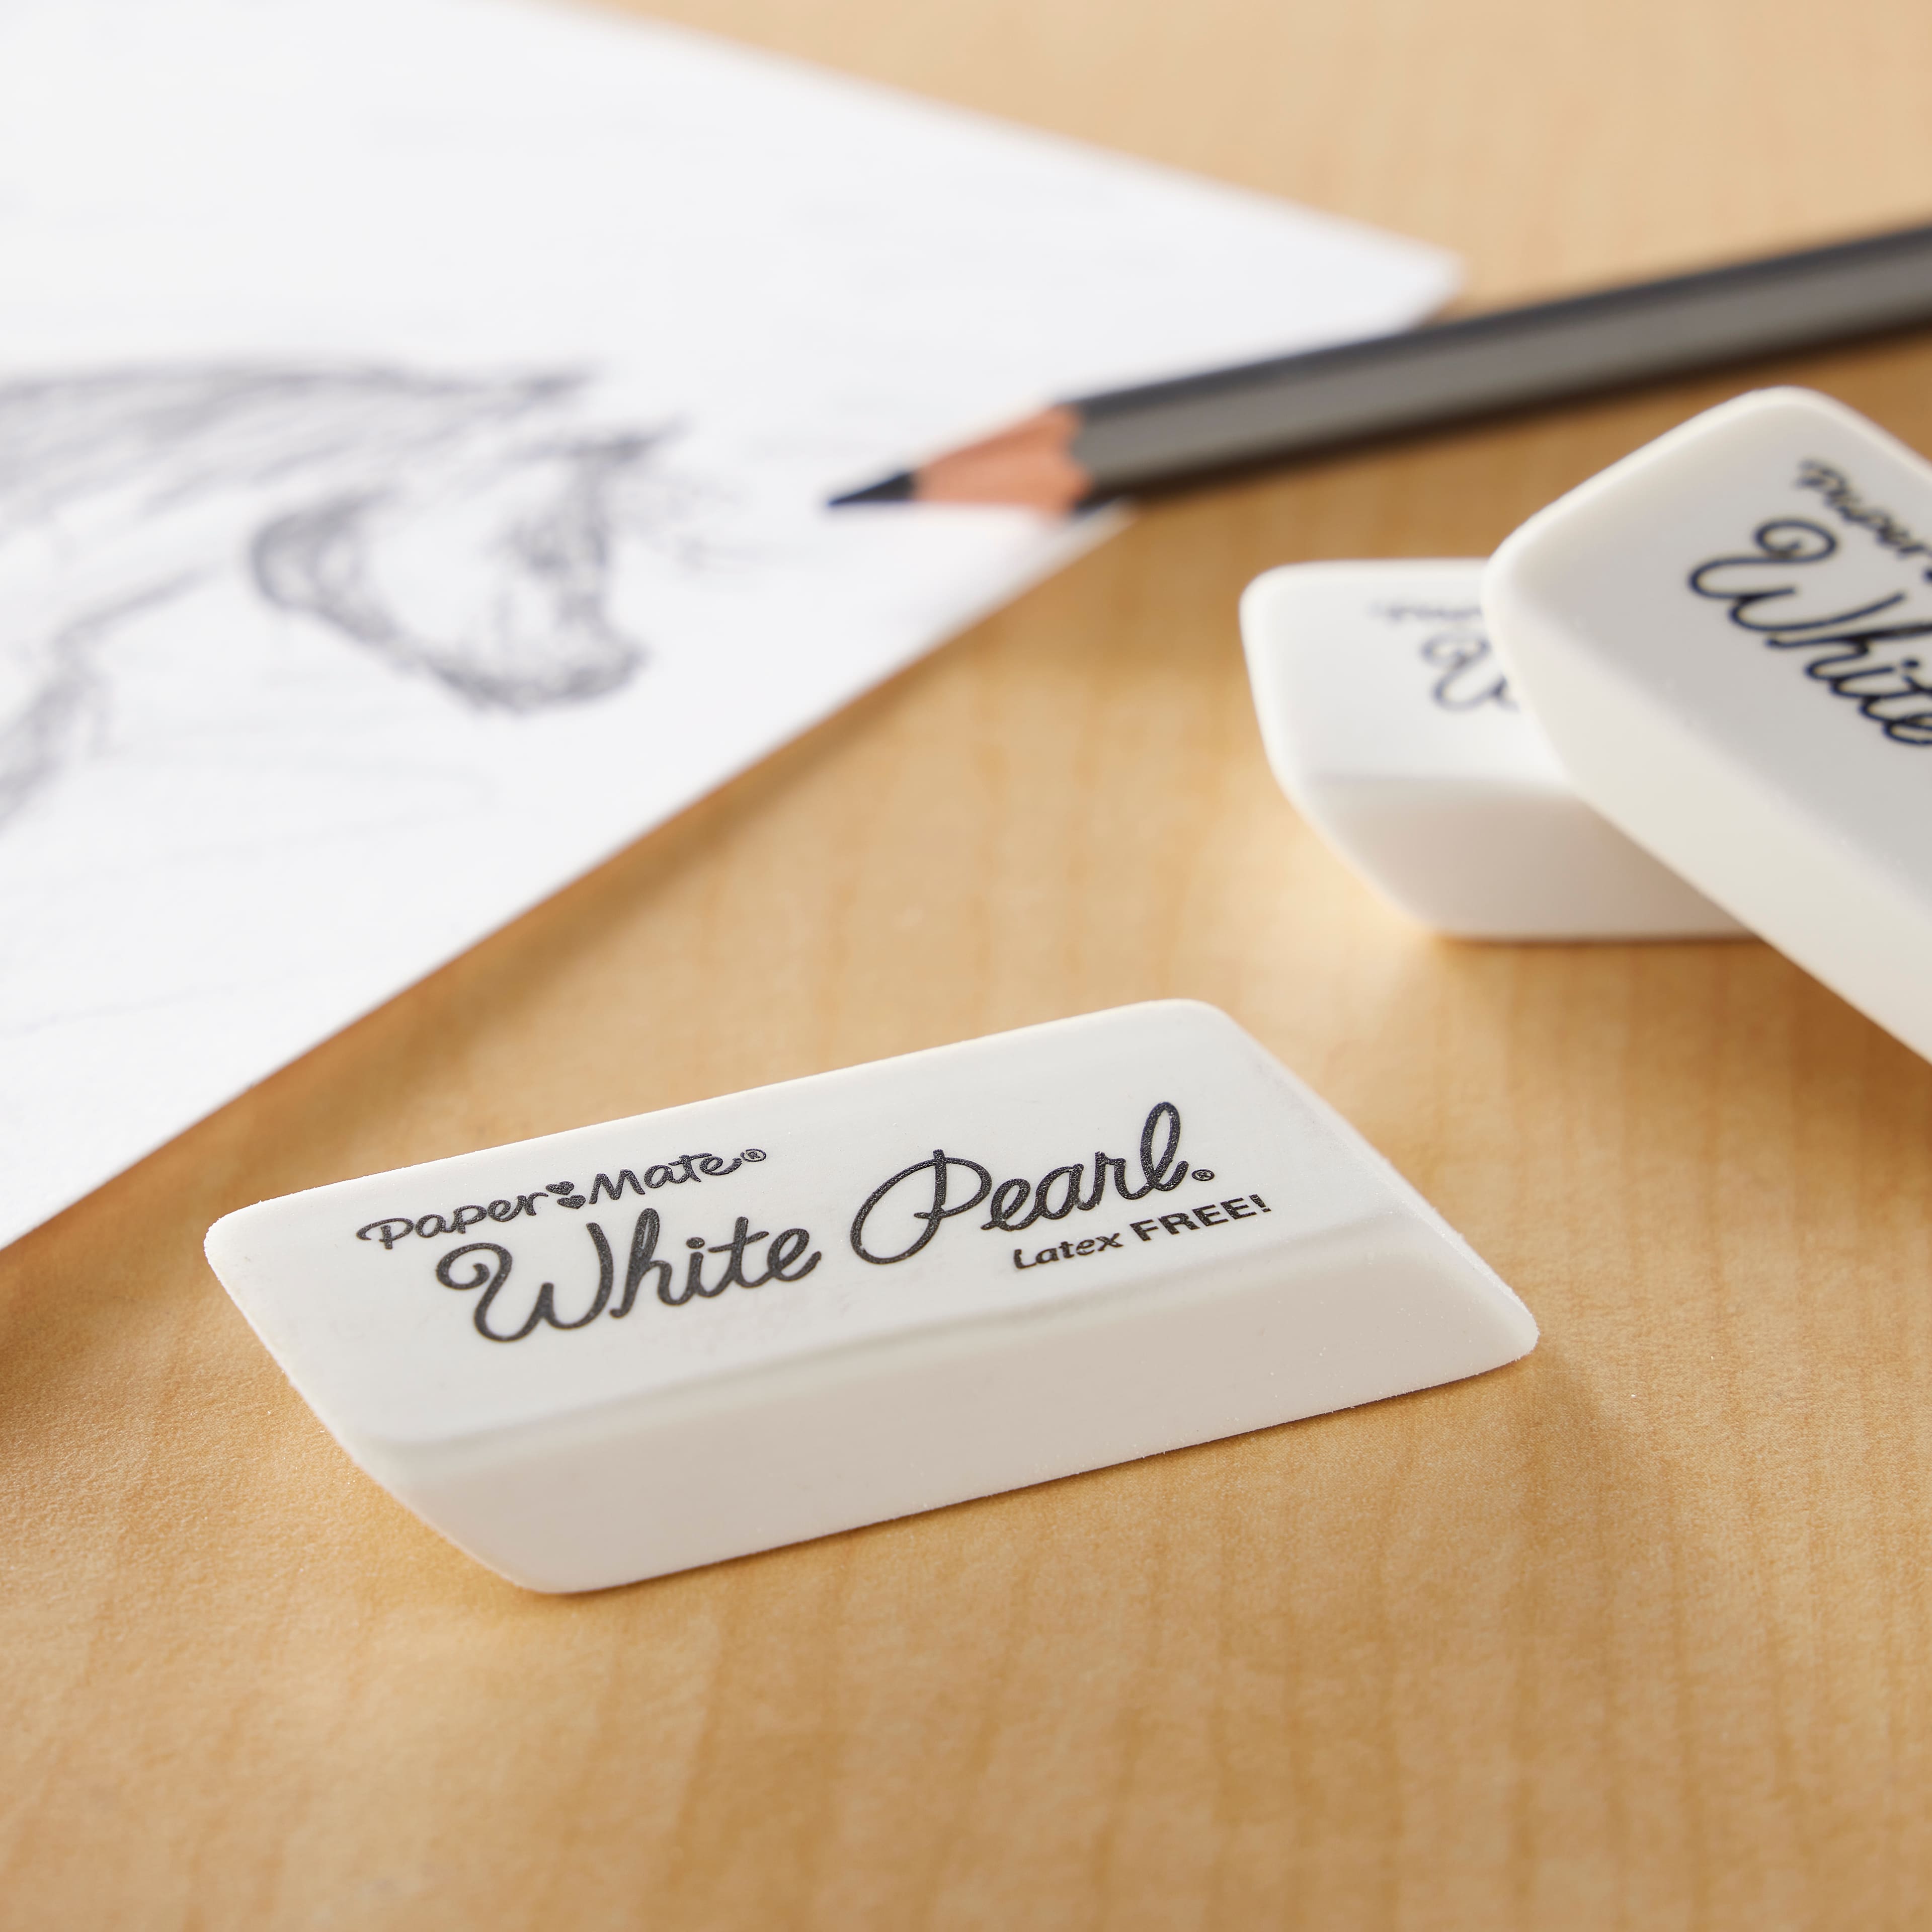 Paper Mate&#xAE; White Pearl&#xAE; Erasers